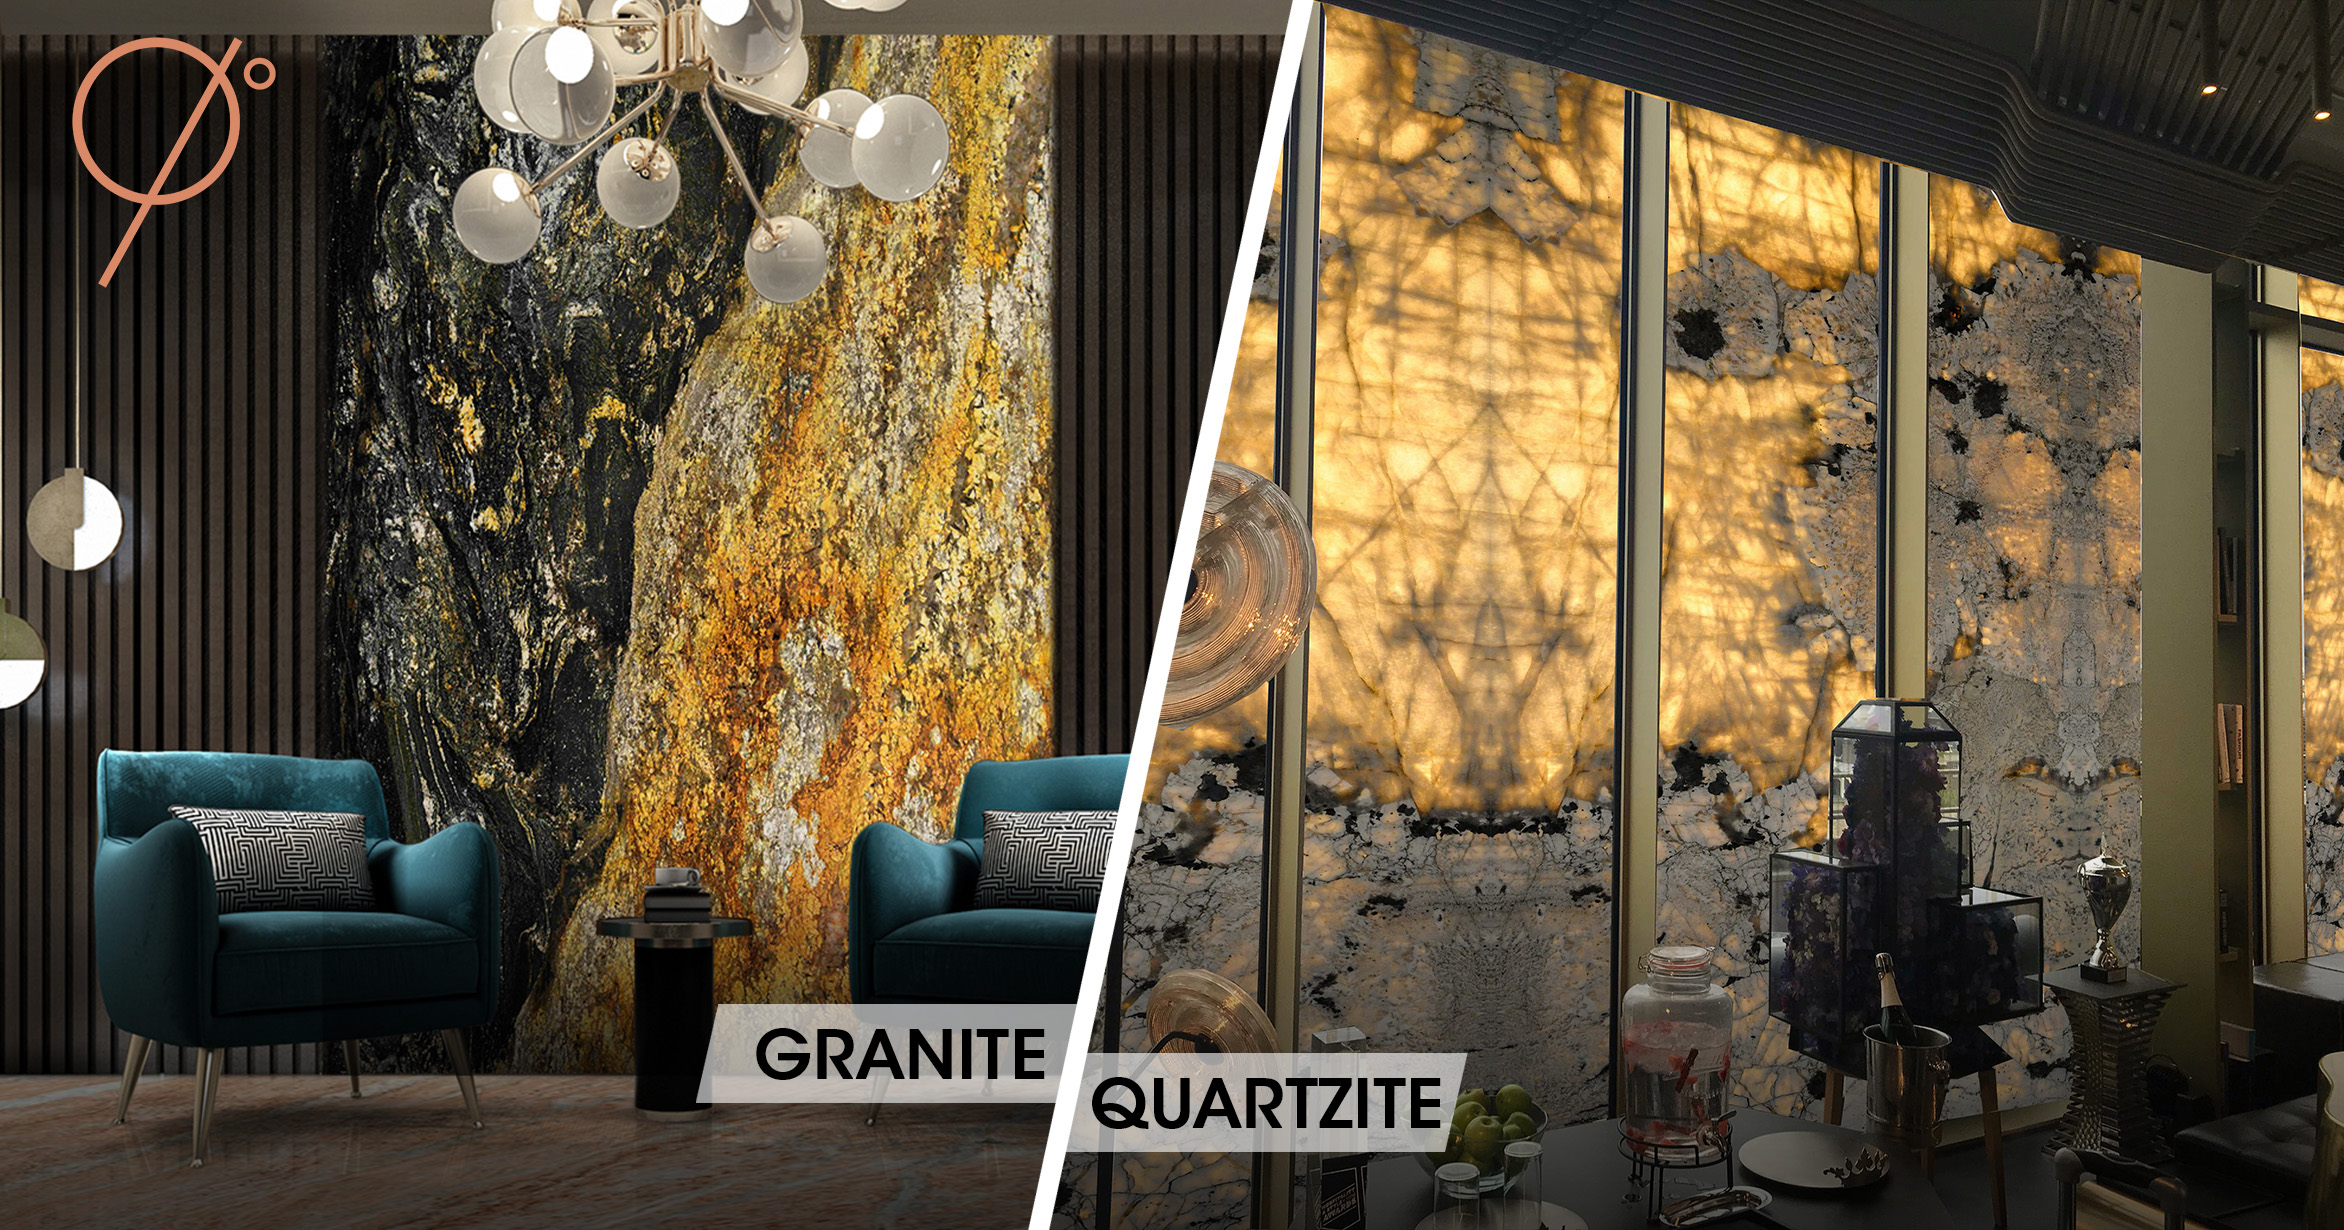 Front-lit granite wall highlight vs. Backlit quartzite focus wall 